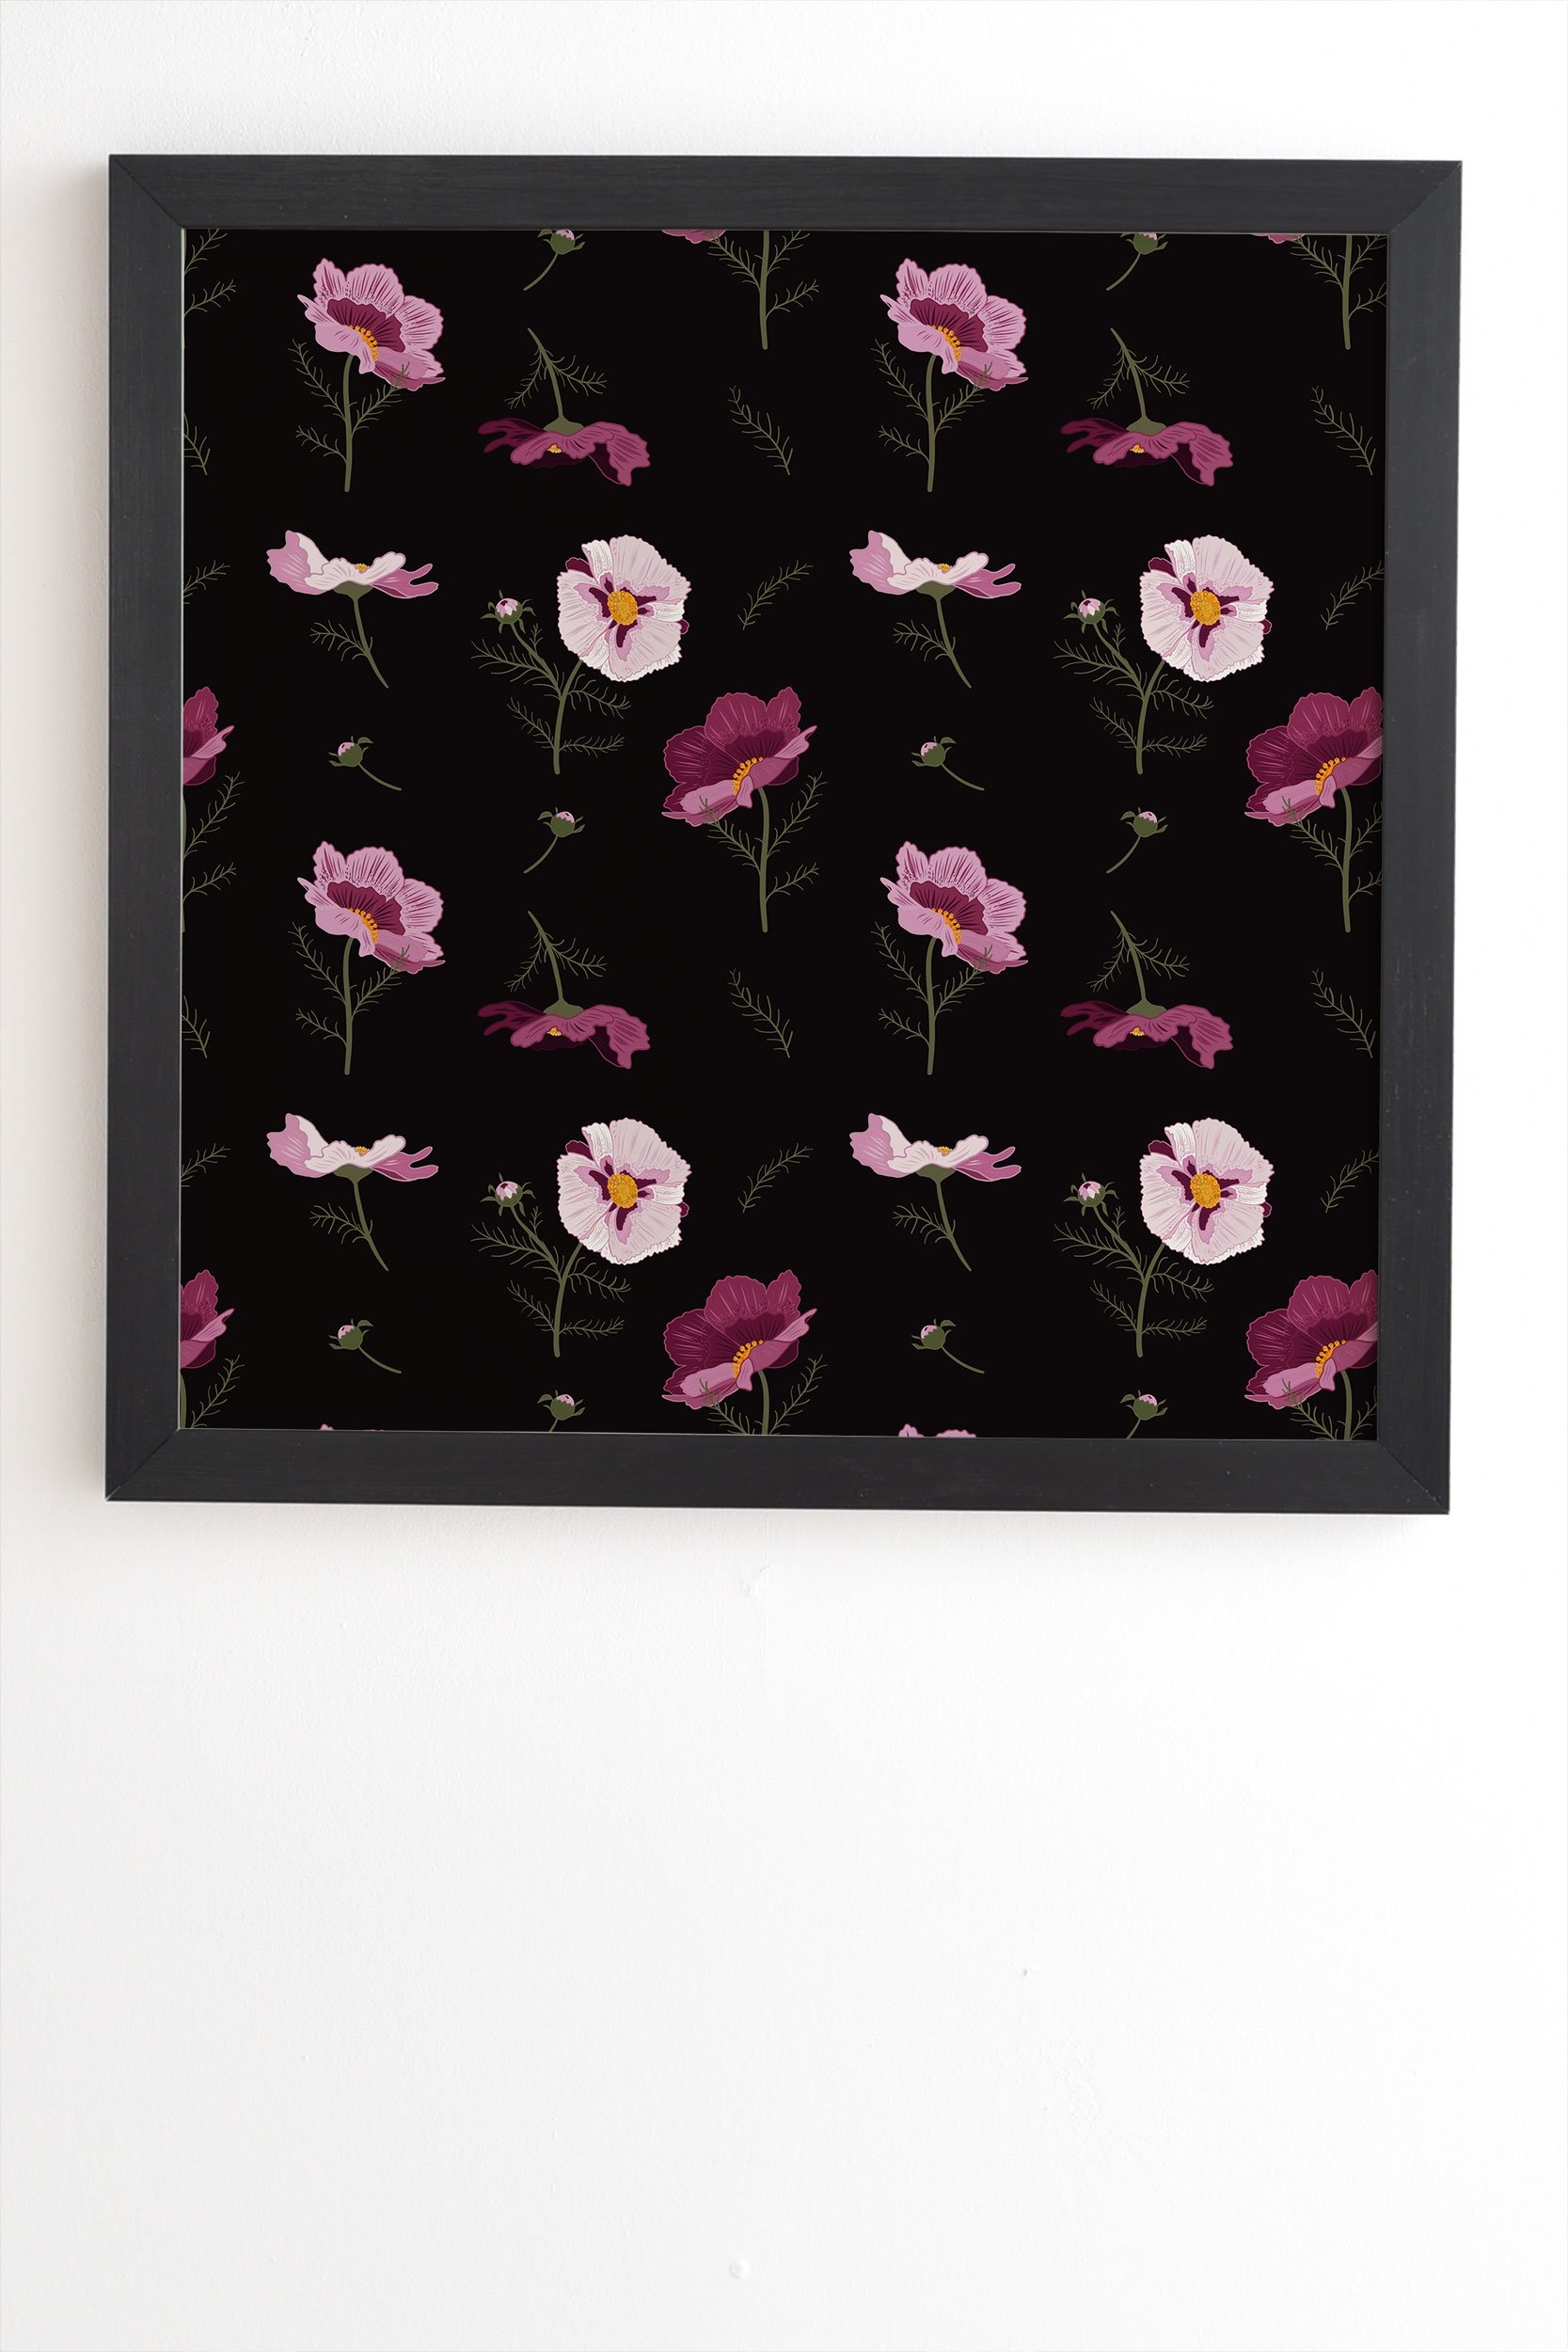 Iveta Abolina Florrie Night Black Framed Wall Art - 14" x 16.5" - Image 1